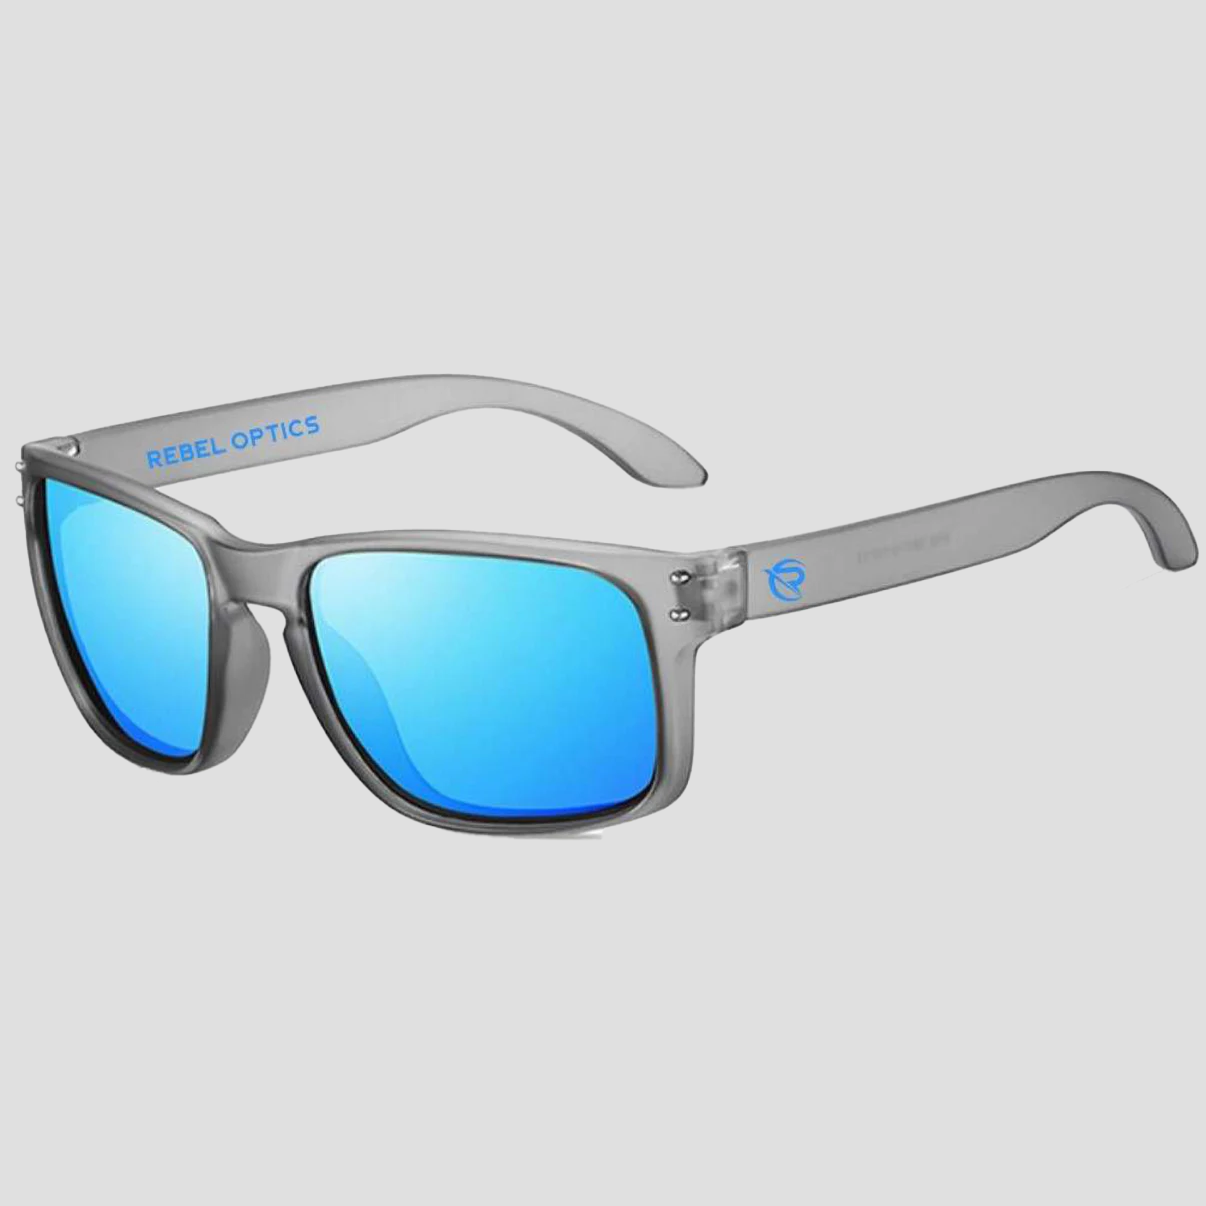 Maverick Sunglasses - Premium Sunglasses from Rebel Optics - Just $50! Shop now at Rebel Optics